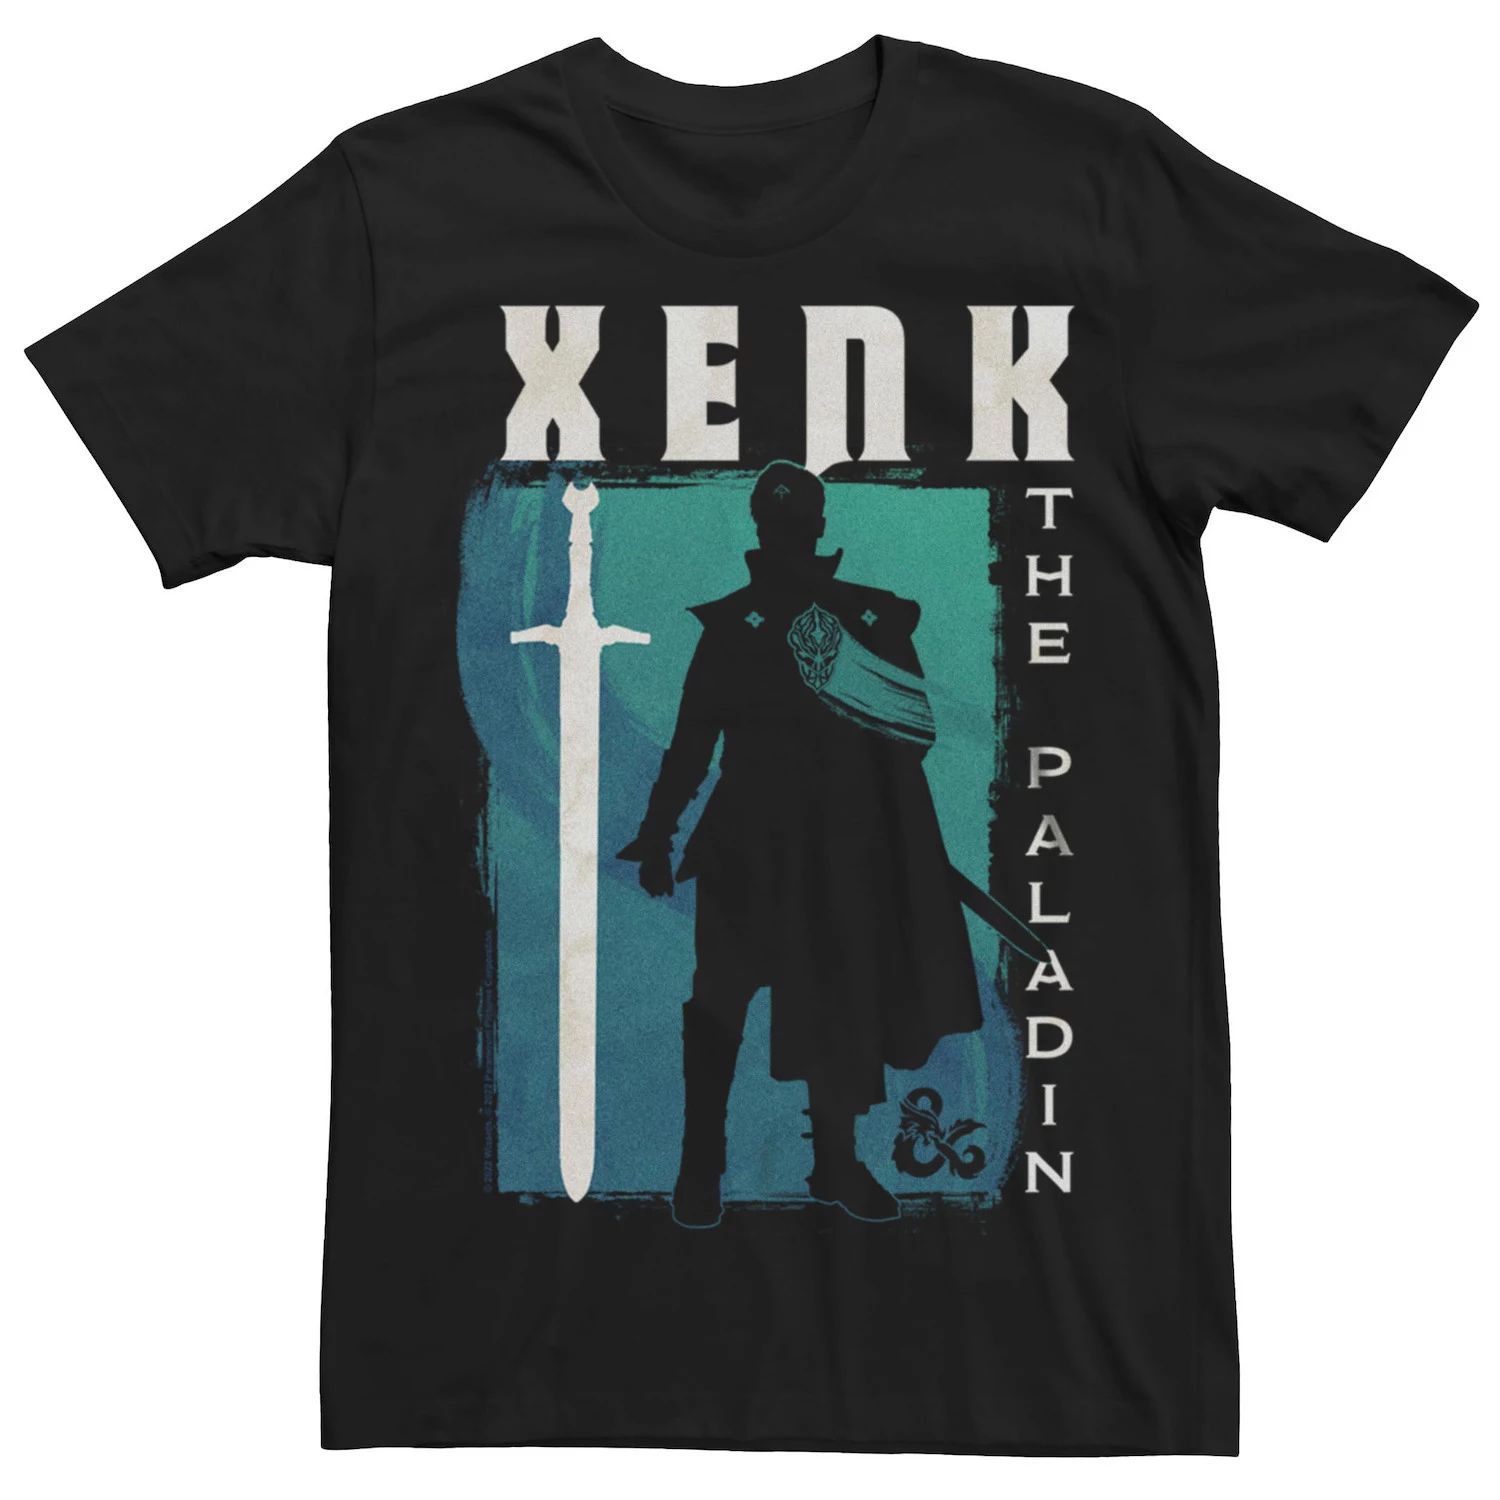 

Мужская футболка с силуэтом Dungeons & Dragons Xenk The Paladin Licensed Character